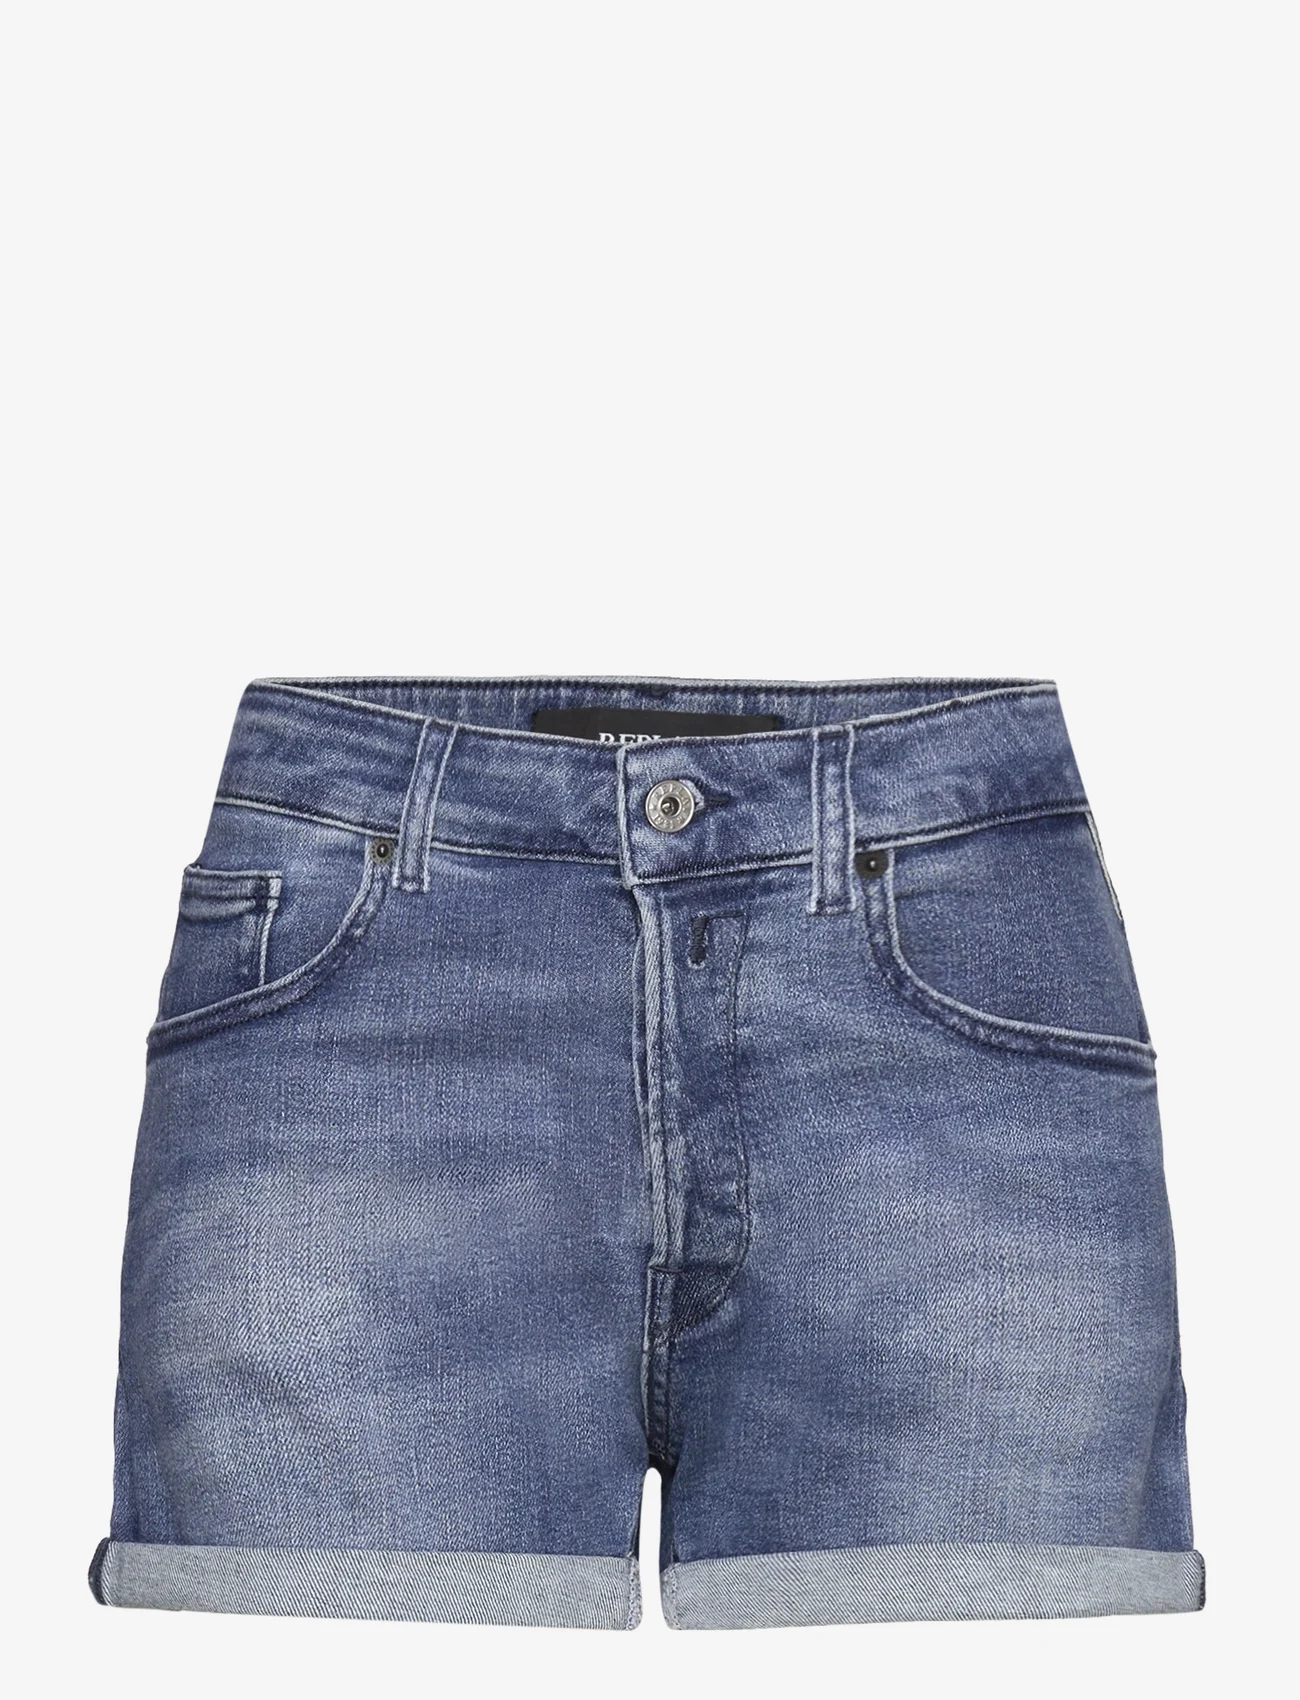 Replay - ANYTA Shorts  C-Stretch - jeansowe szorty - blue - 0